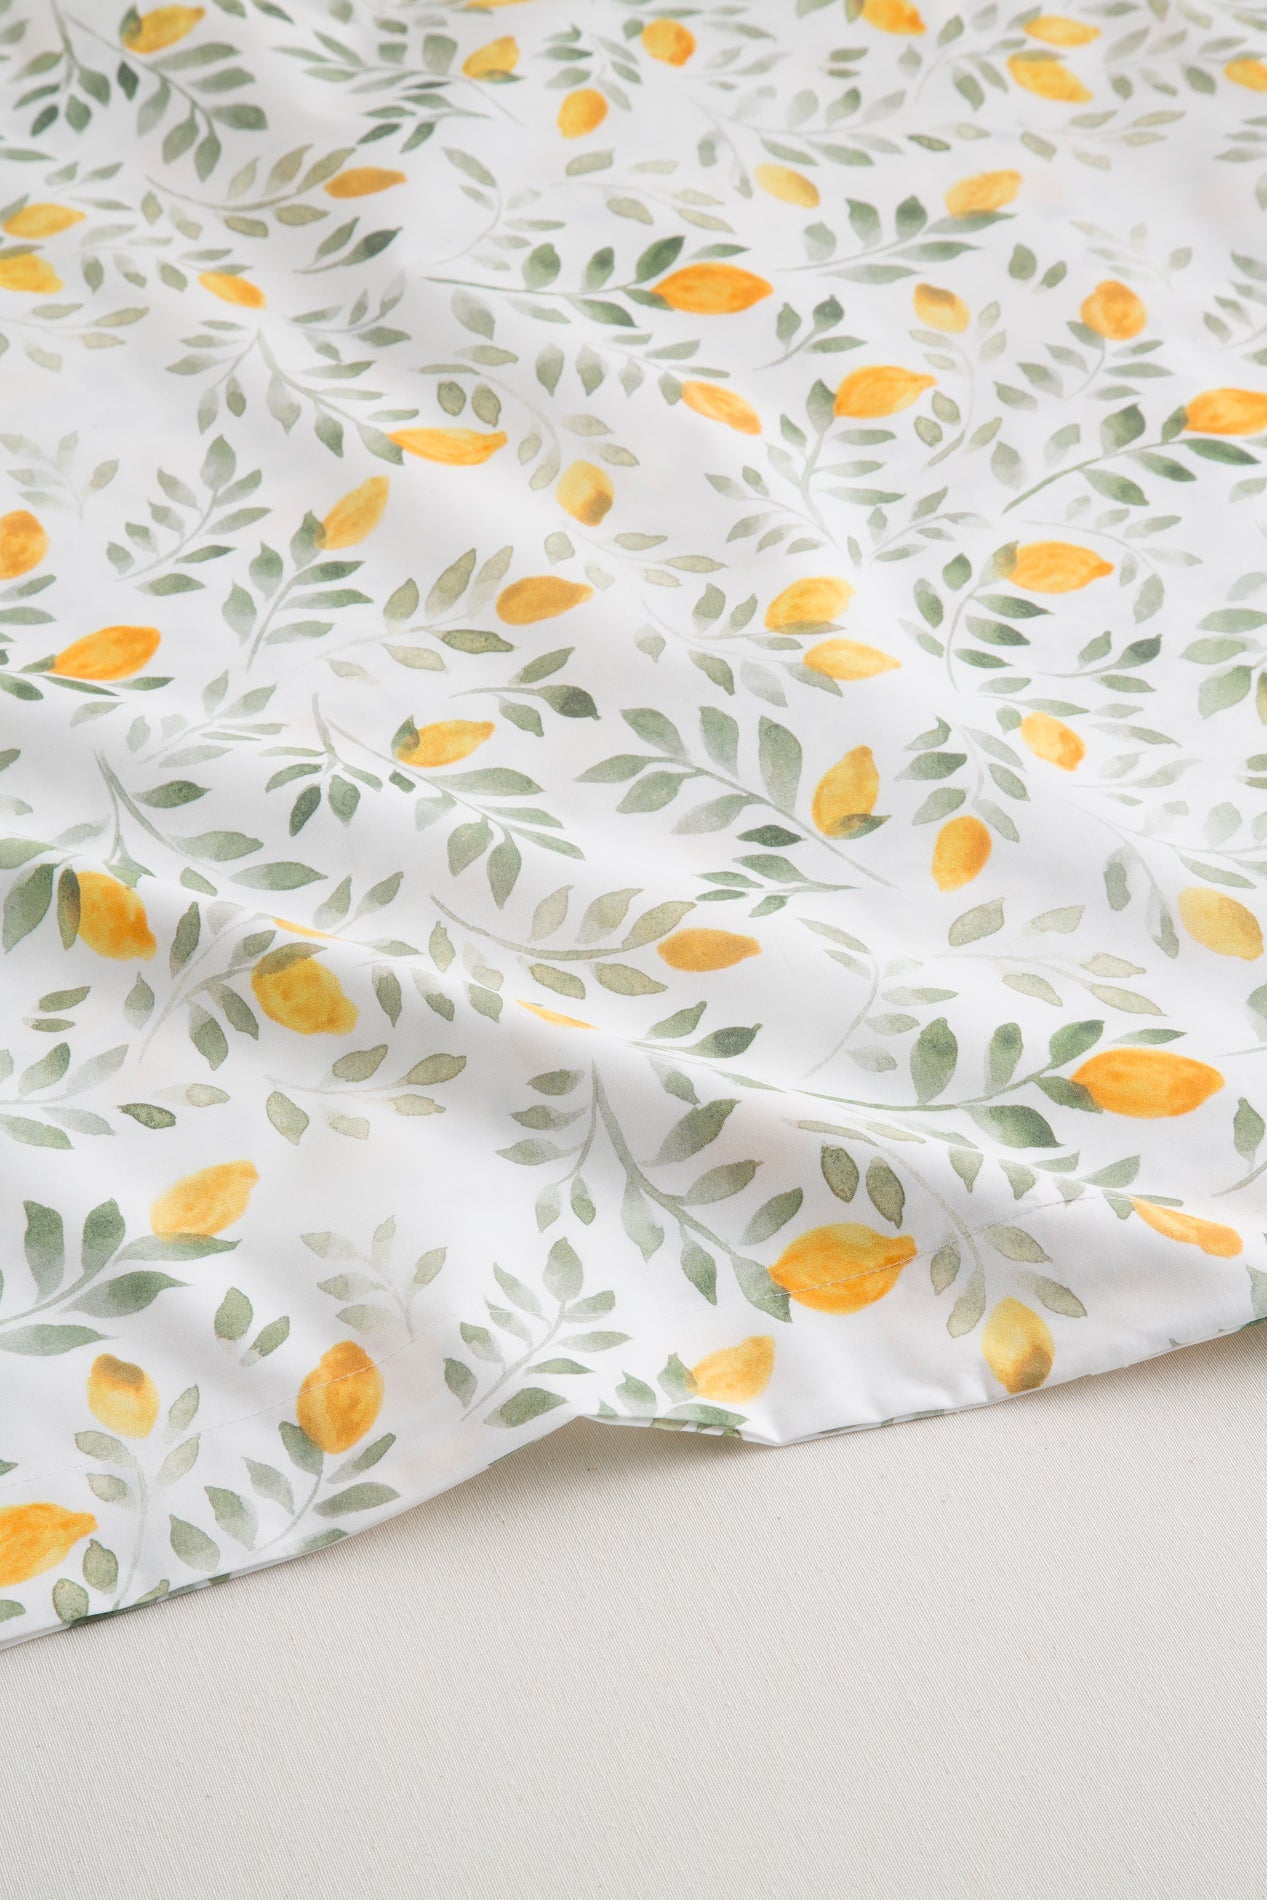 Percale Cotton Top Sheet 200h Bed 180 - Lemons